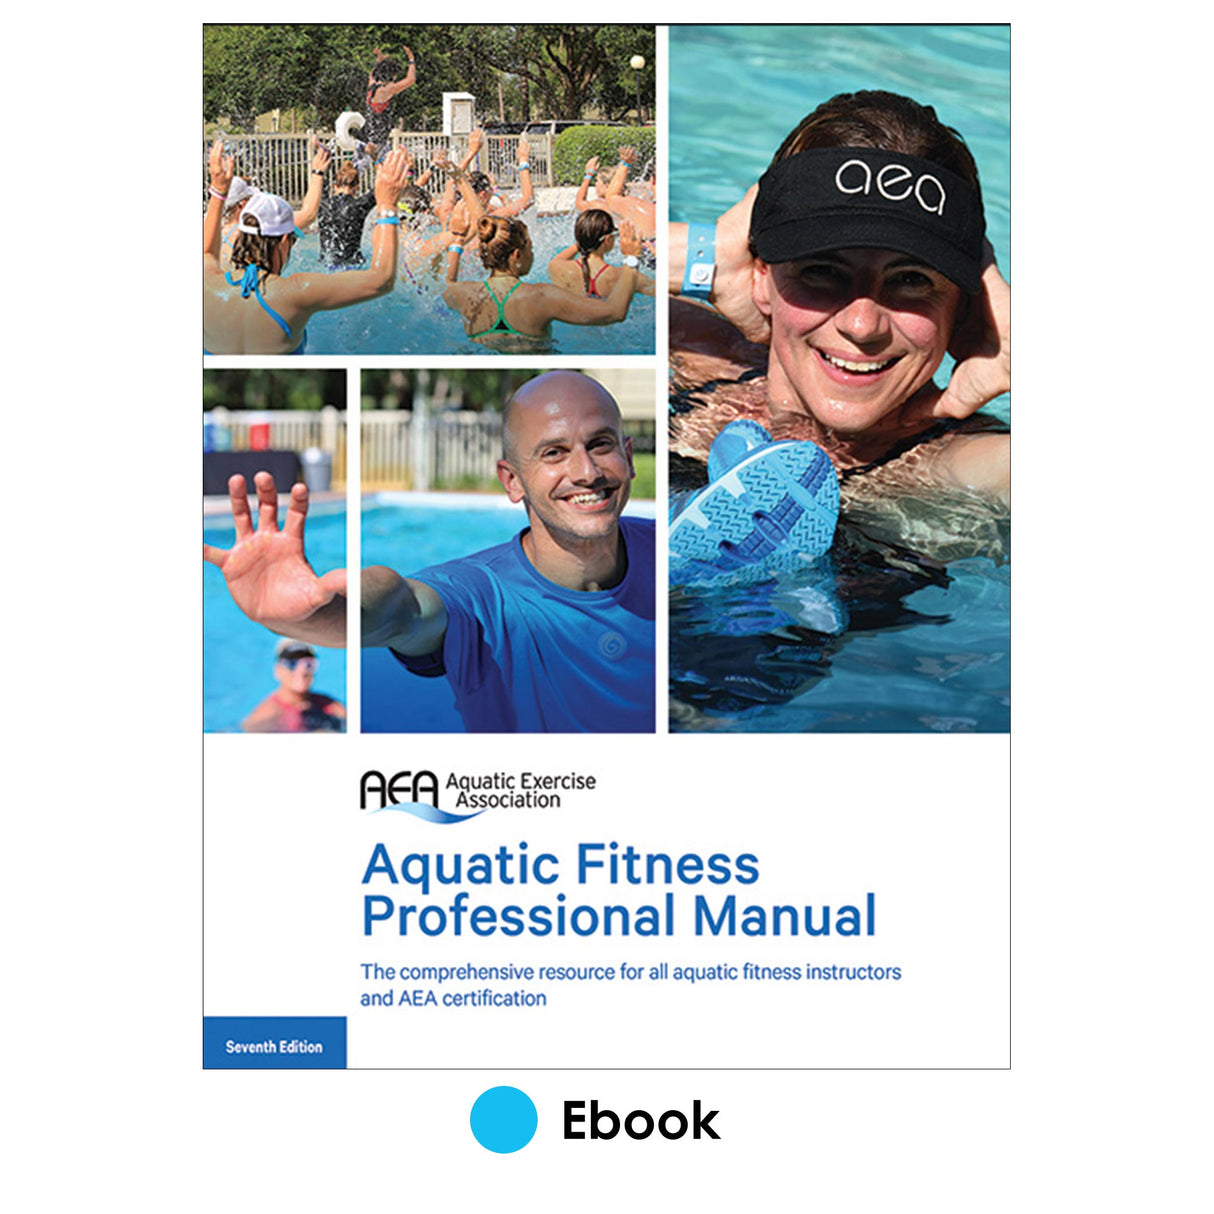 Aquatic Fitness Professional Manual 7th Edition PDF